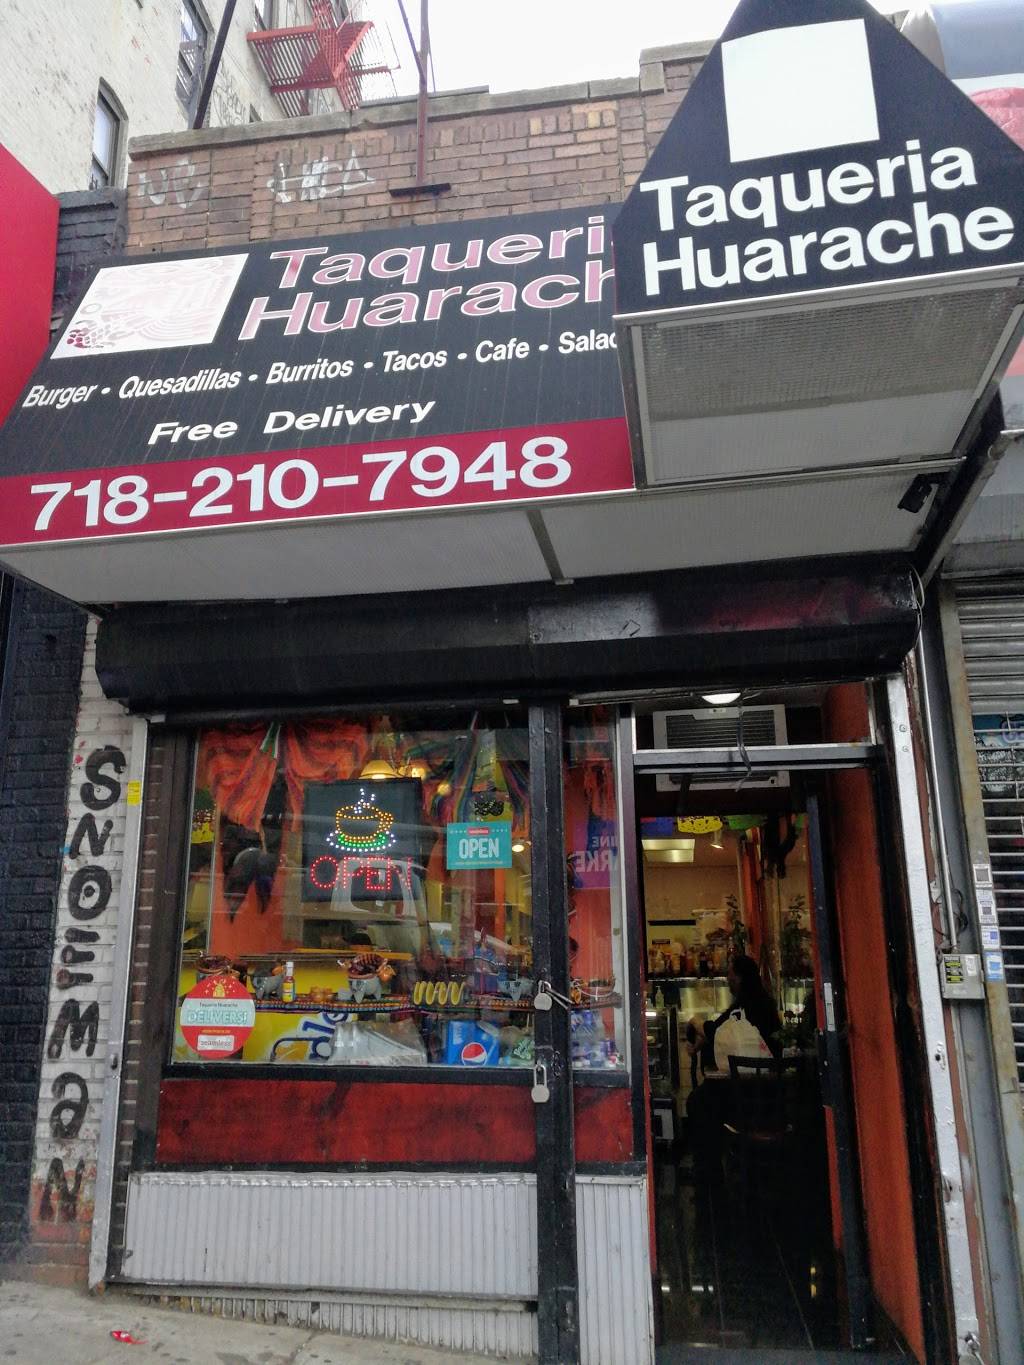 Taqueria Huarache | restaurant | 16 E Mt Eden Ave, Bronx, NY 10452, USA | 7182107948 OR +1 718-210-7948